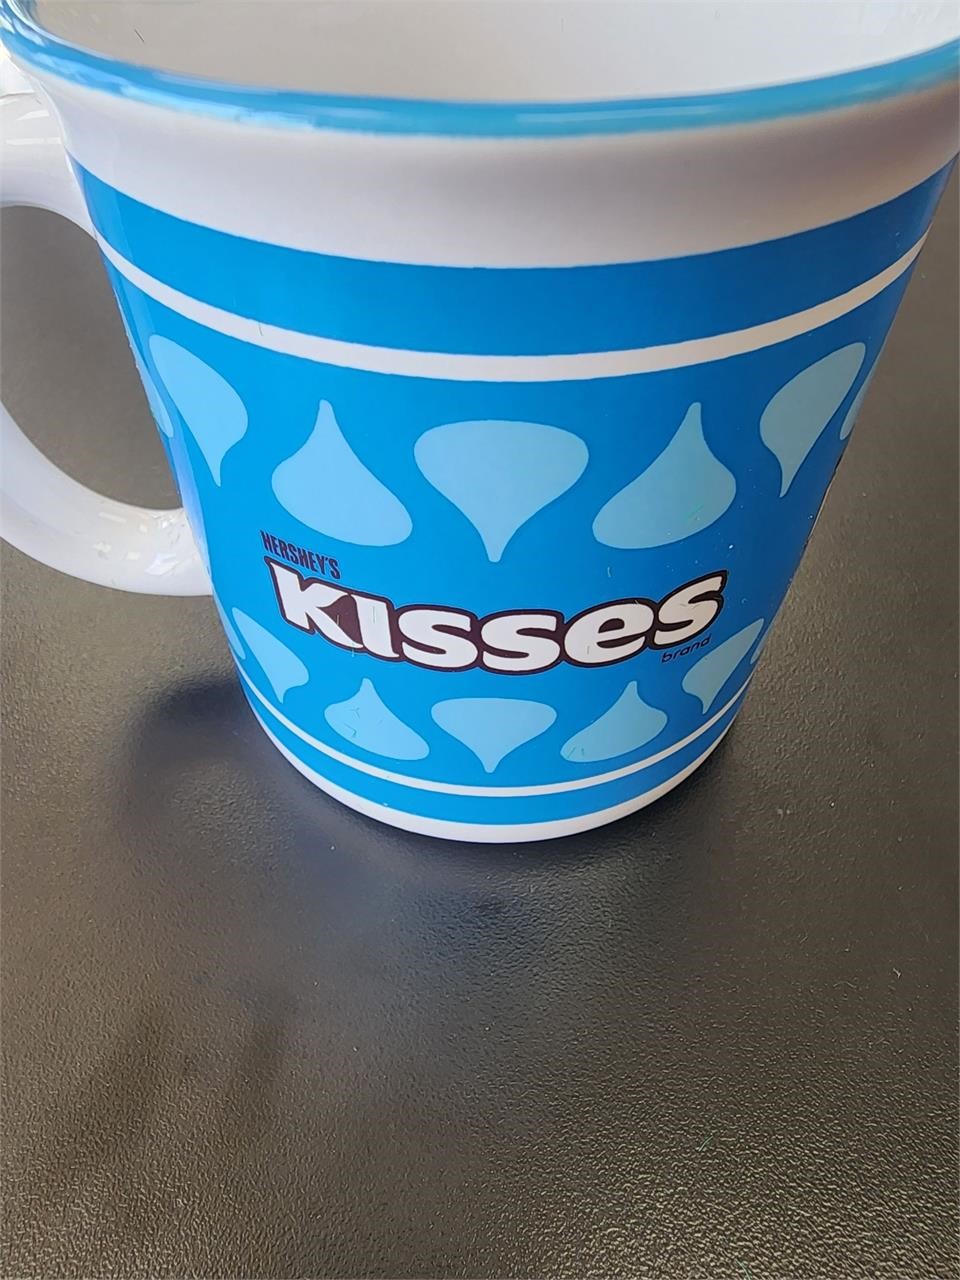 Hershey kisses mug